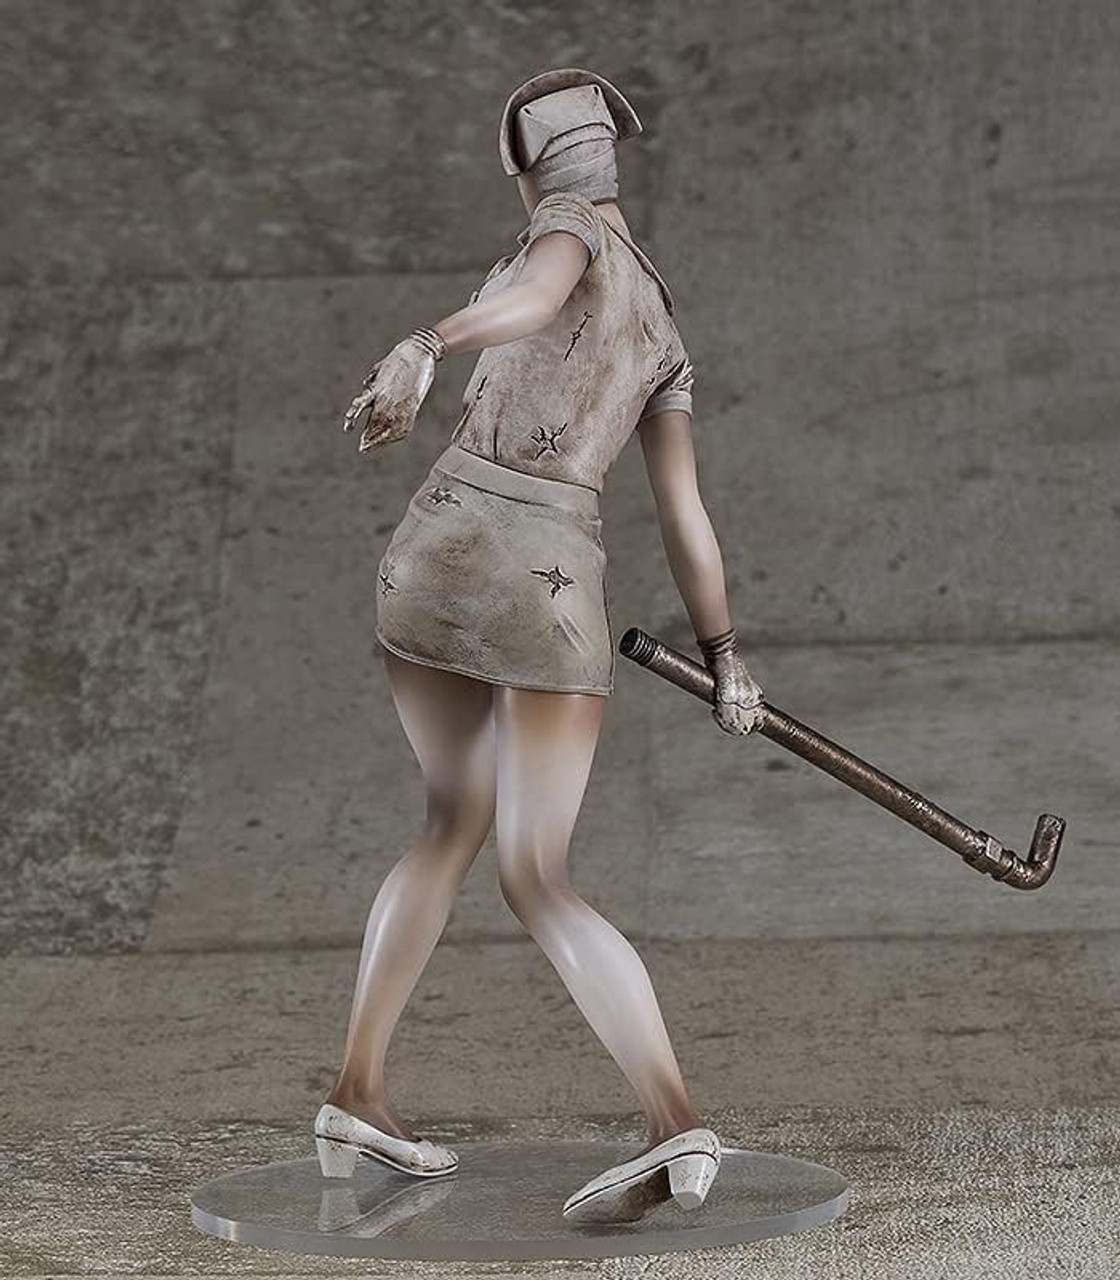 Good Smile Silent Hill 2: Bubble Head Nurse Figma Action Figure, White and  Tan